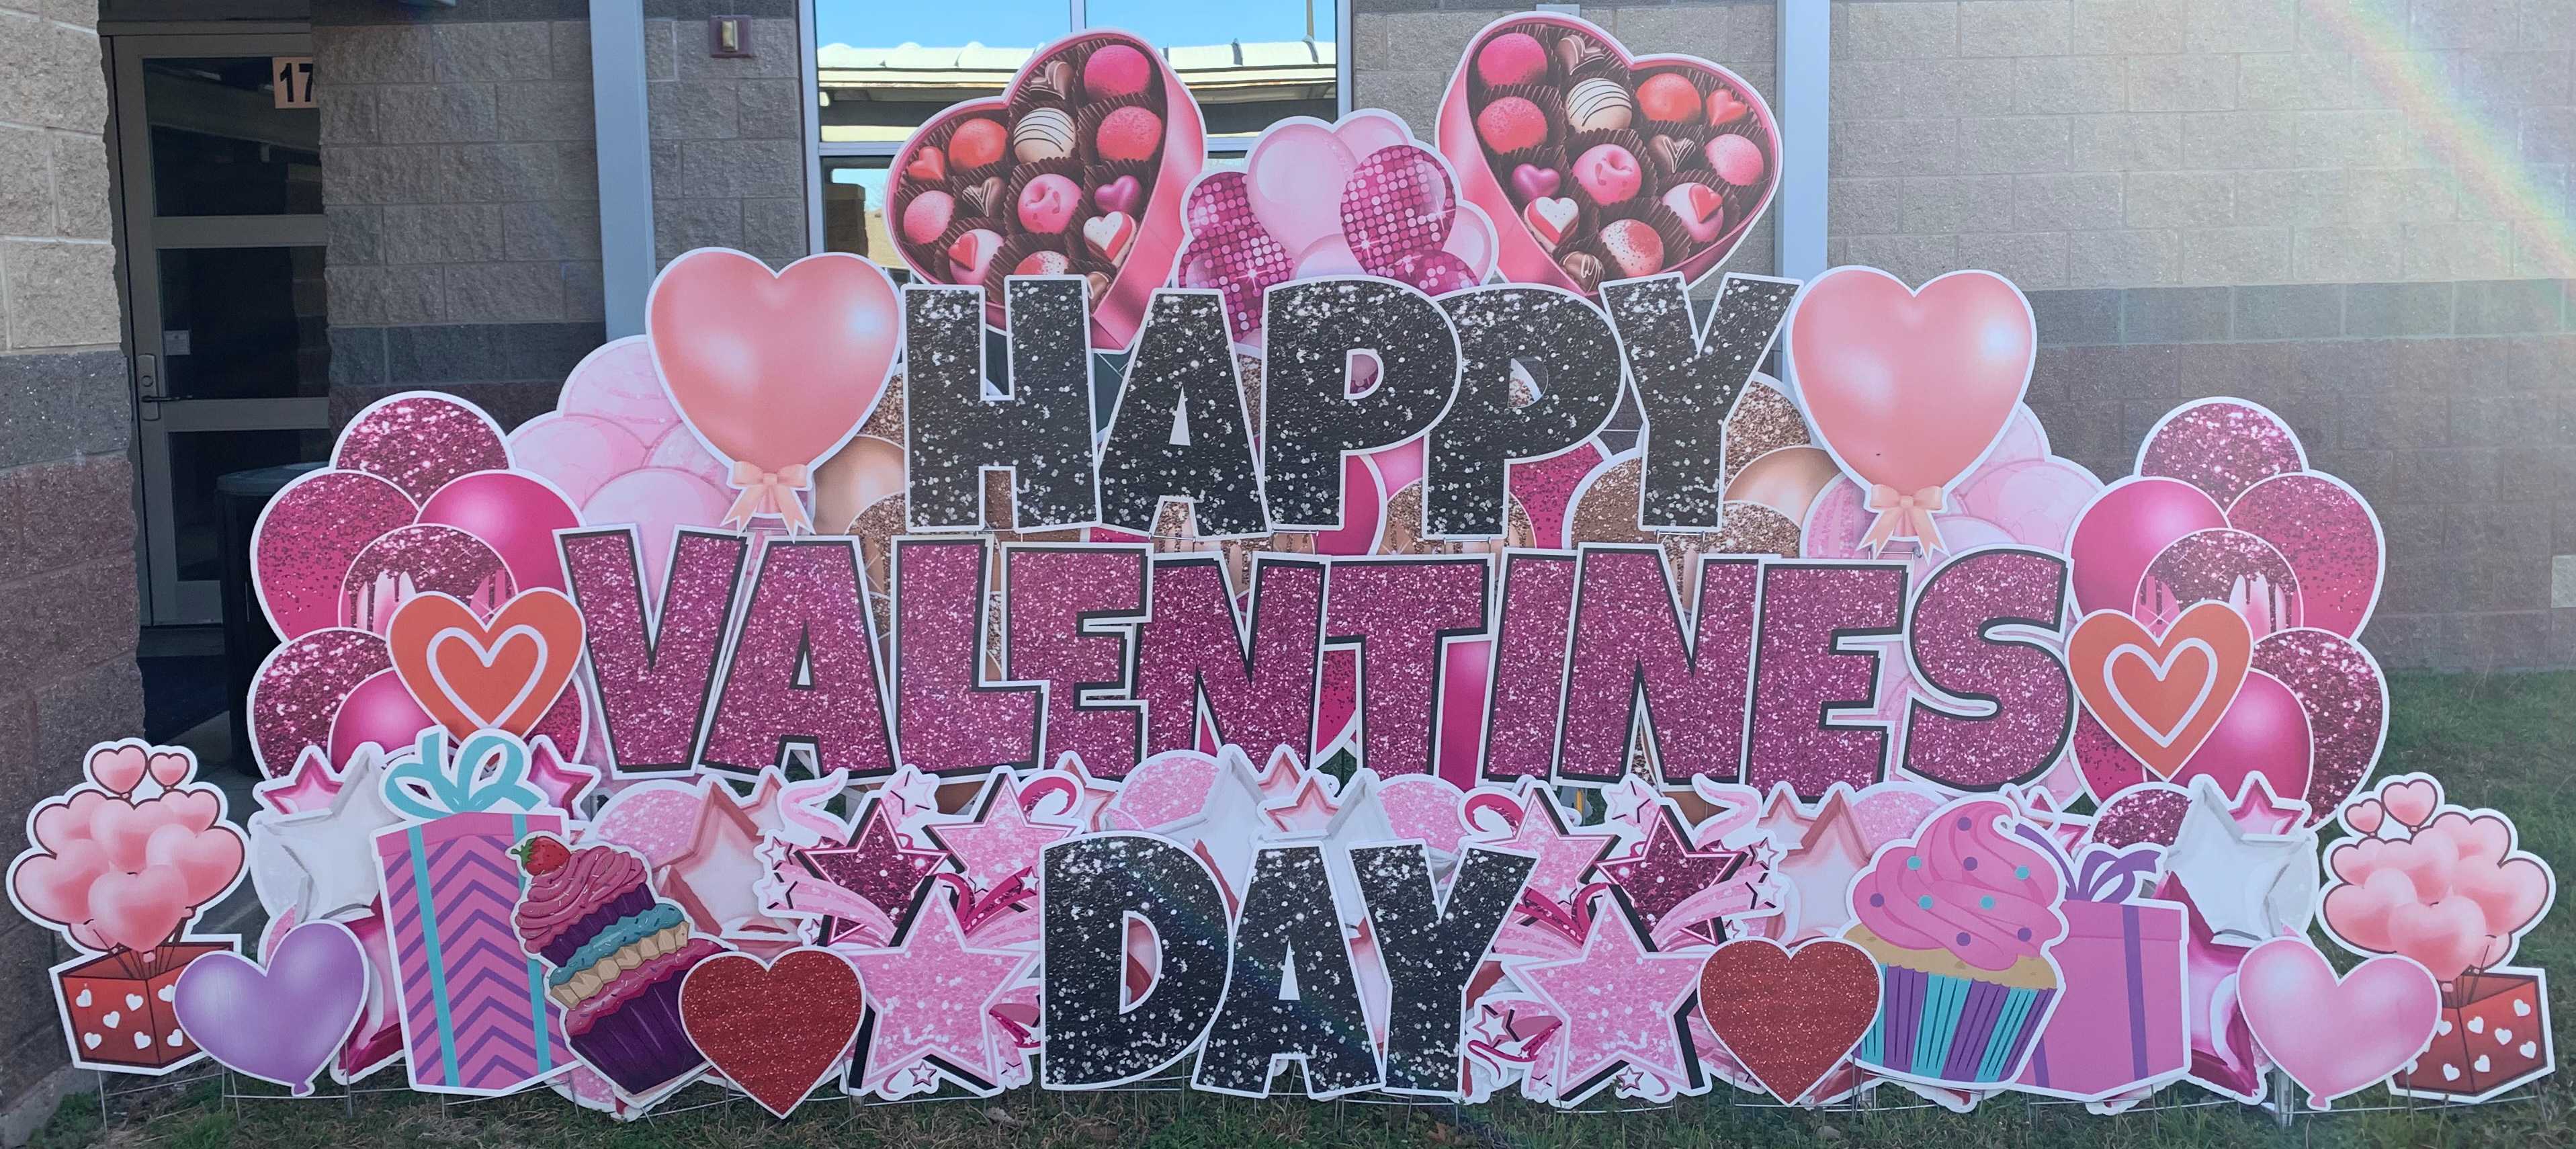 Yard card sign happy valentines day mega 